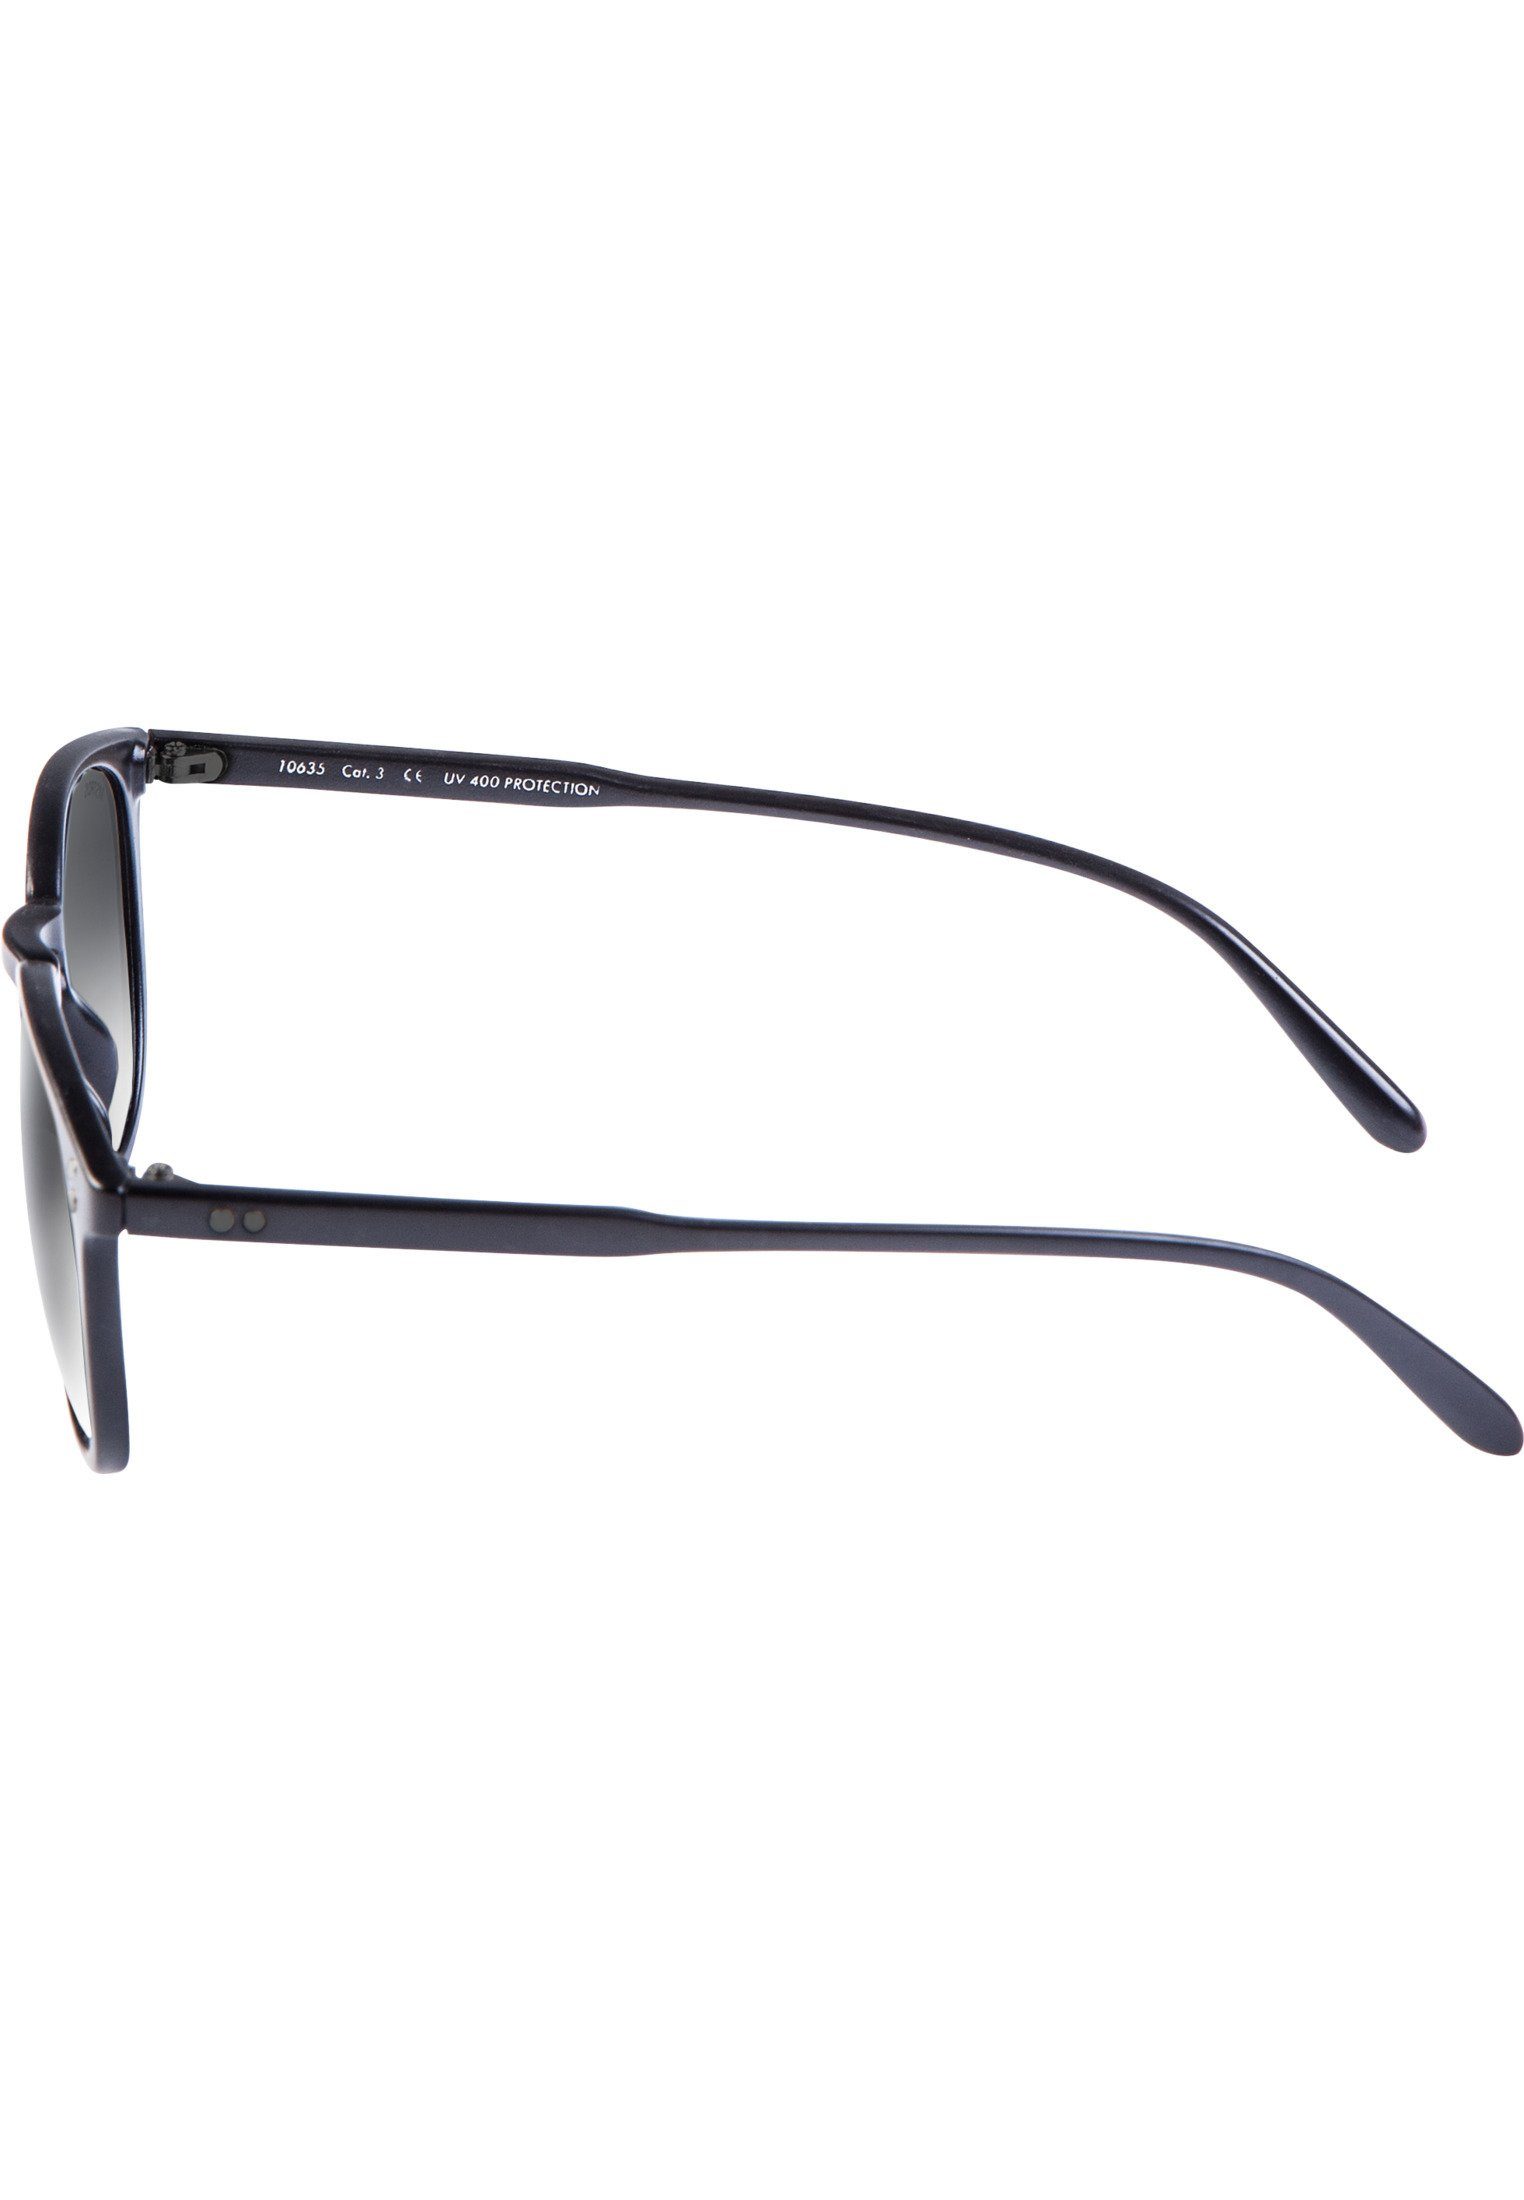 MSTRDS Sonnenbrille Accessoires Youth Arthur blk/gry Sunglasses